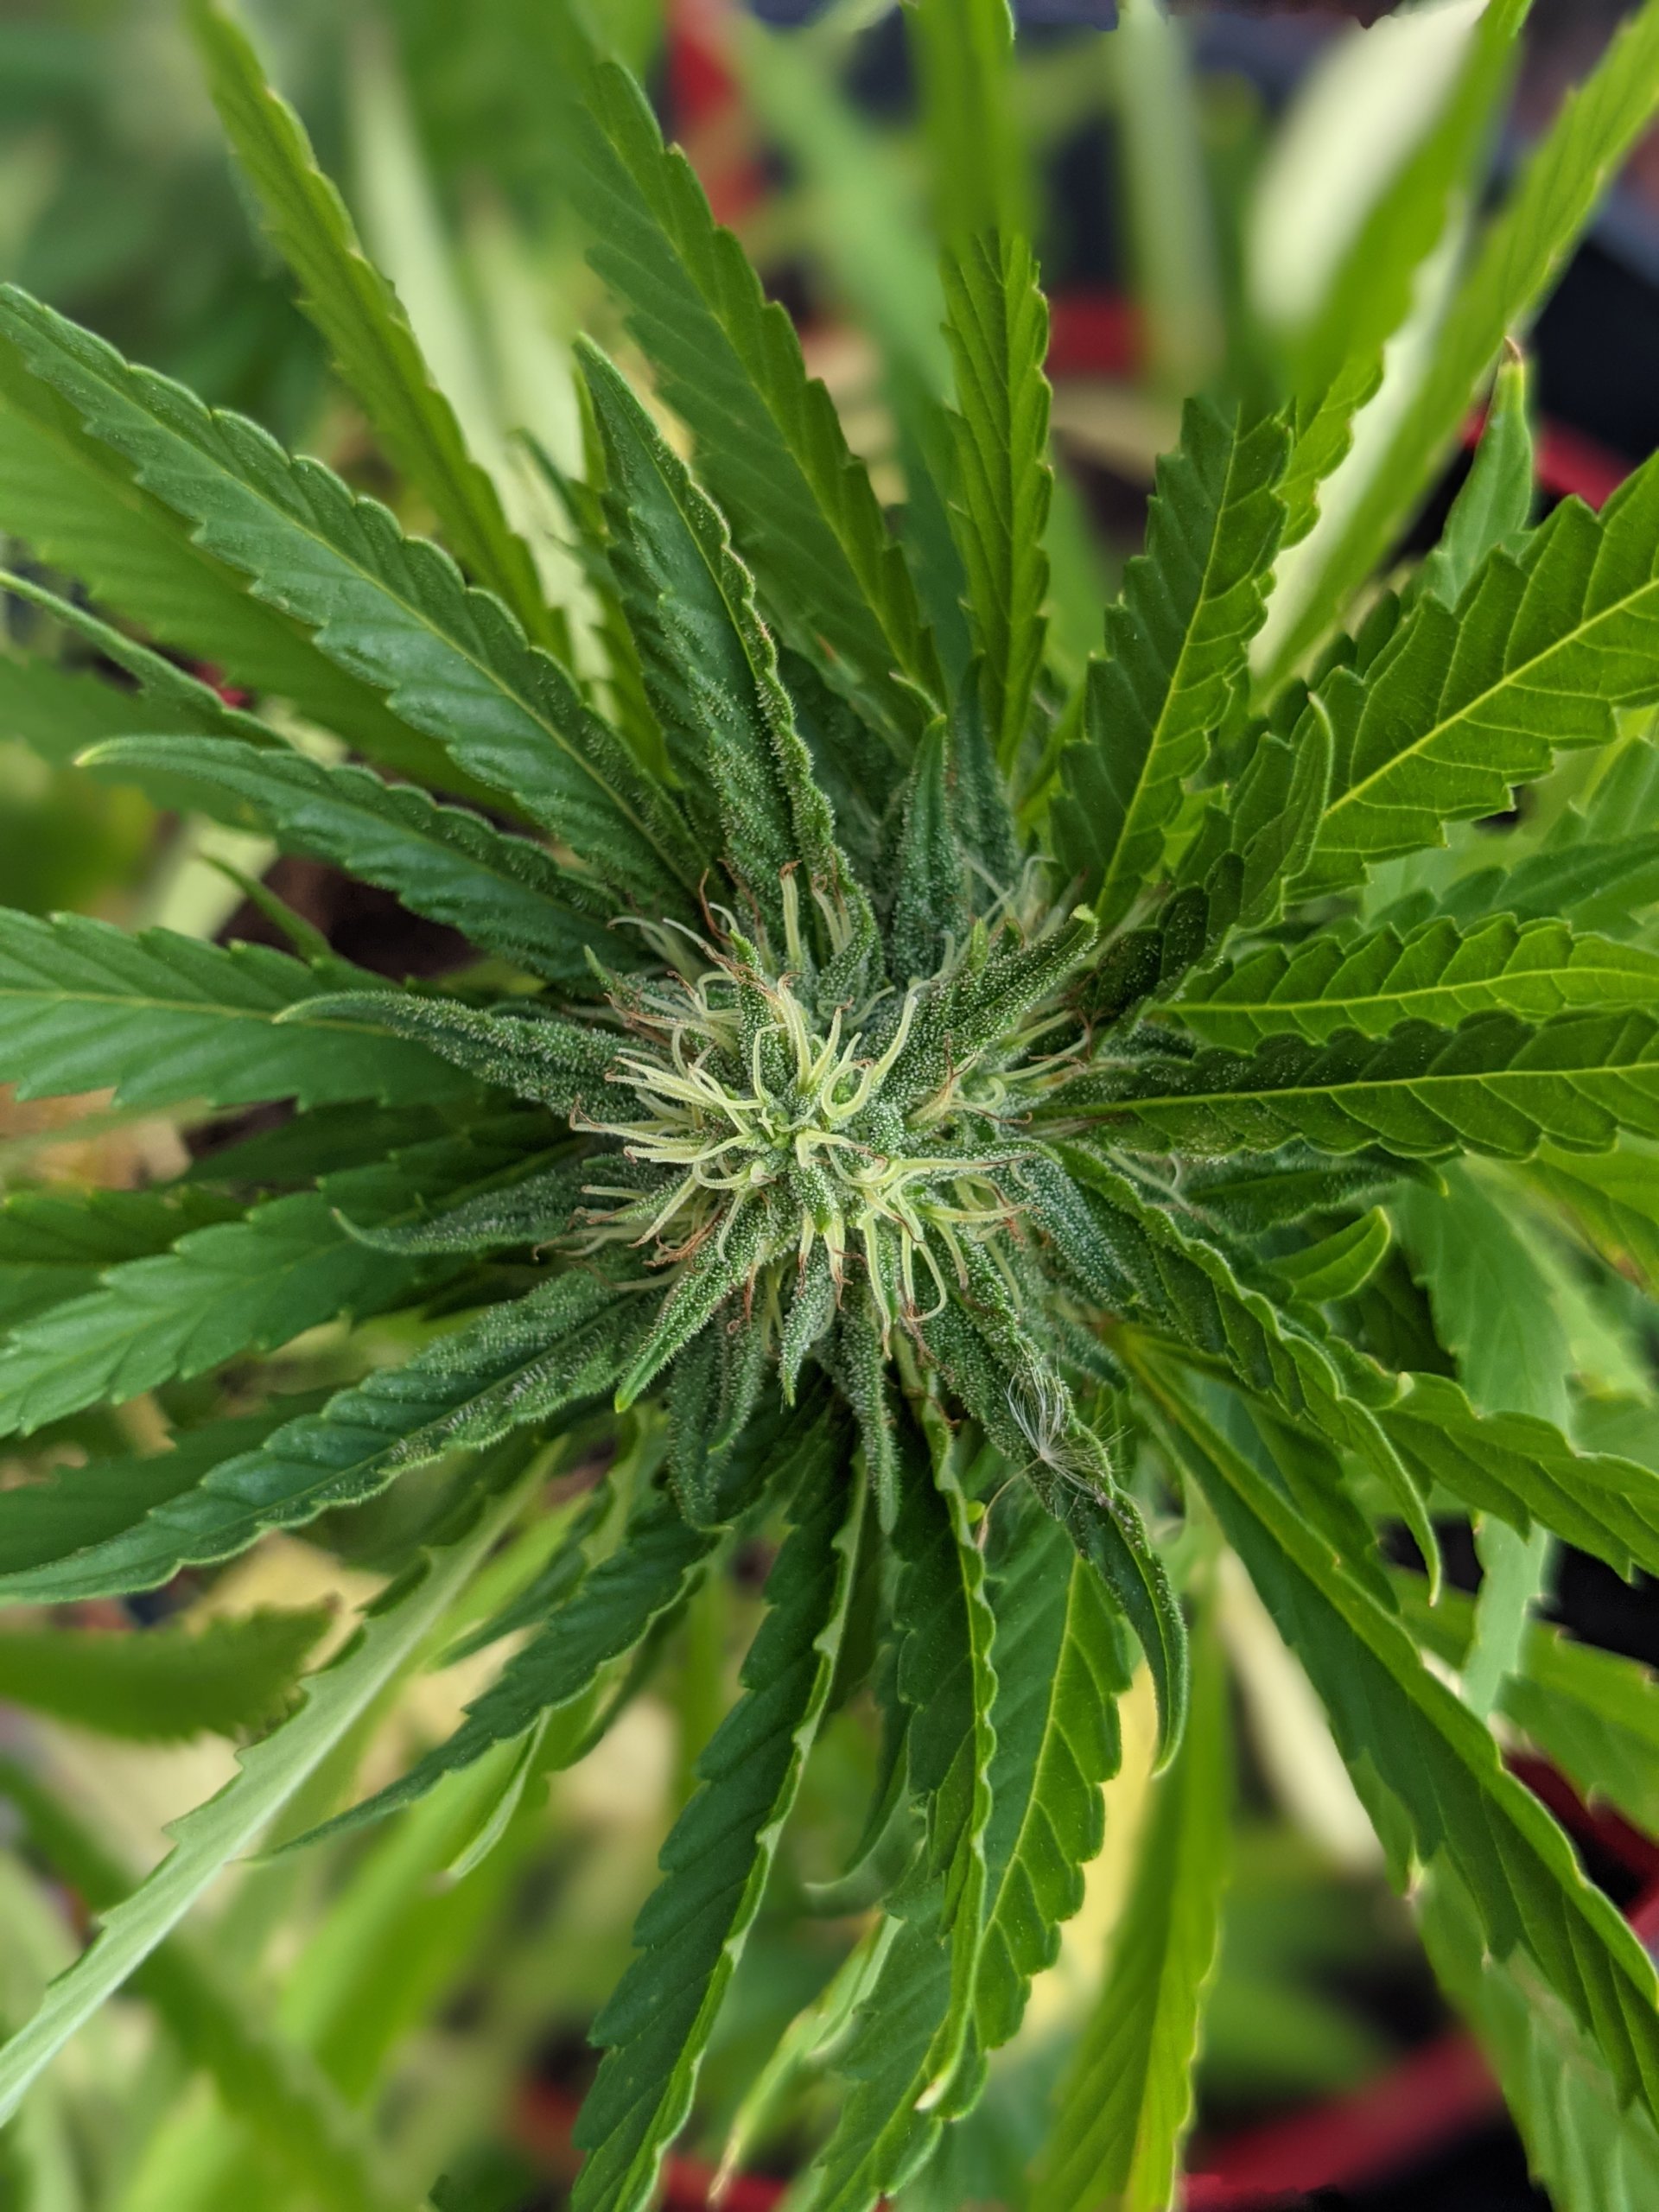 NM judge orders cannabis regulators, producer to agree on testing ‘regimen’